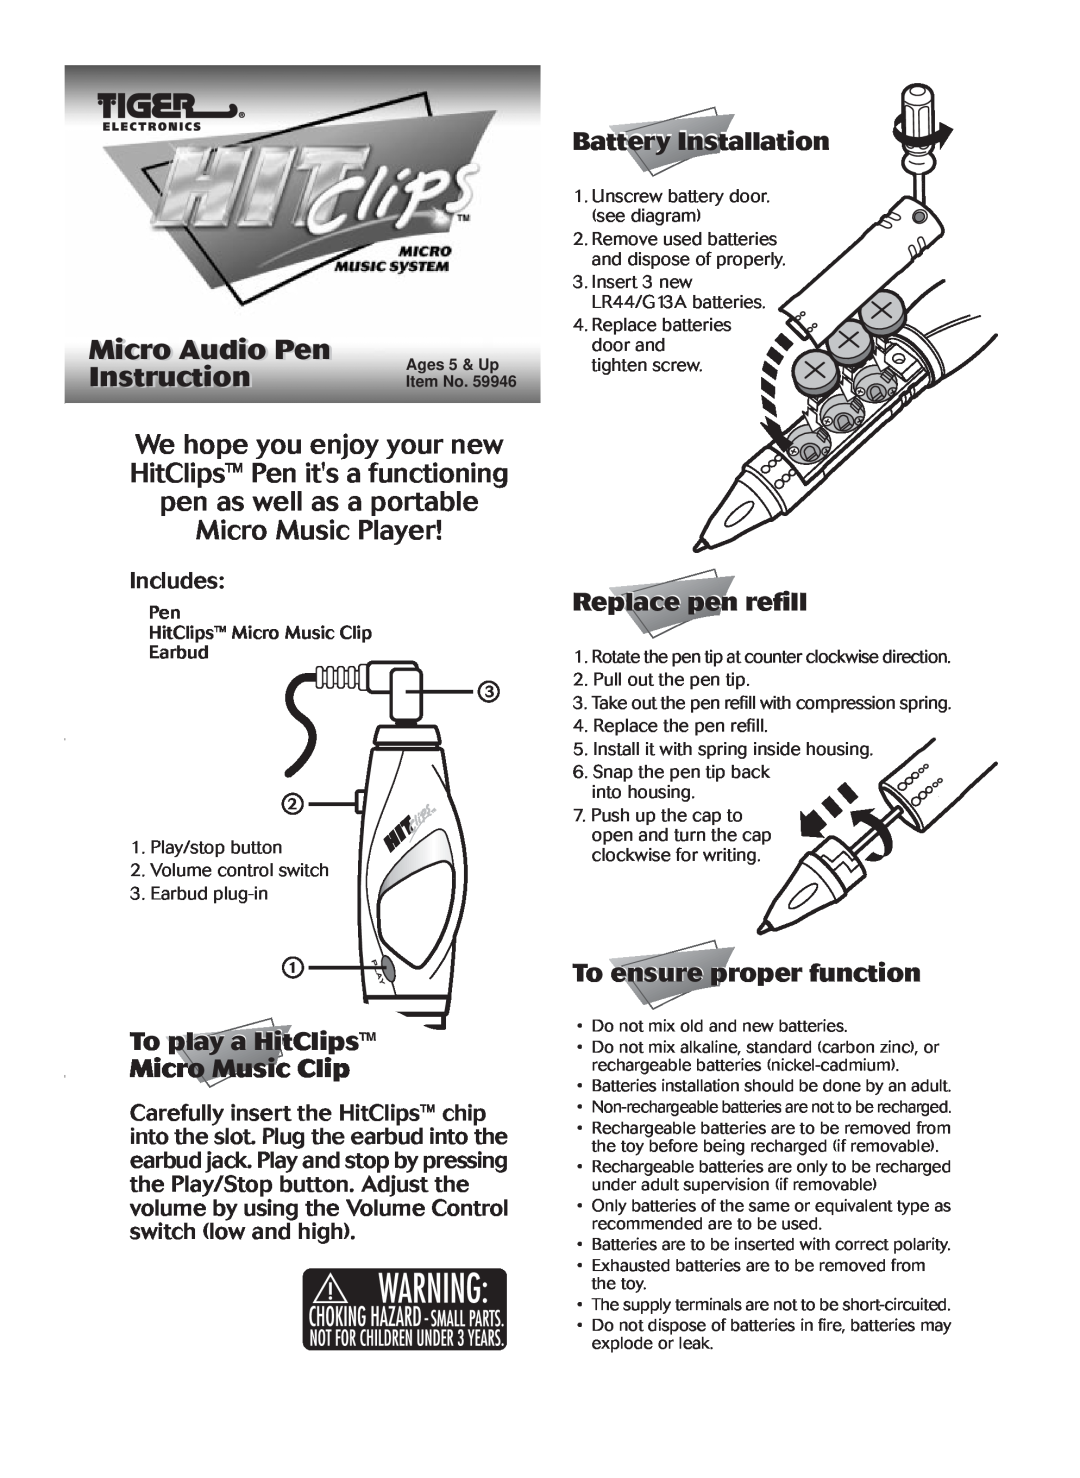 Hasbro 59946 manual To play a HitClips Micro Music Clip, Battery Installation, Replace pen refill, Microi Audioio Pen 